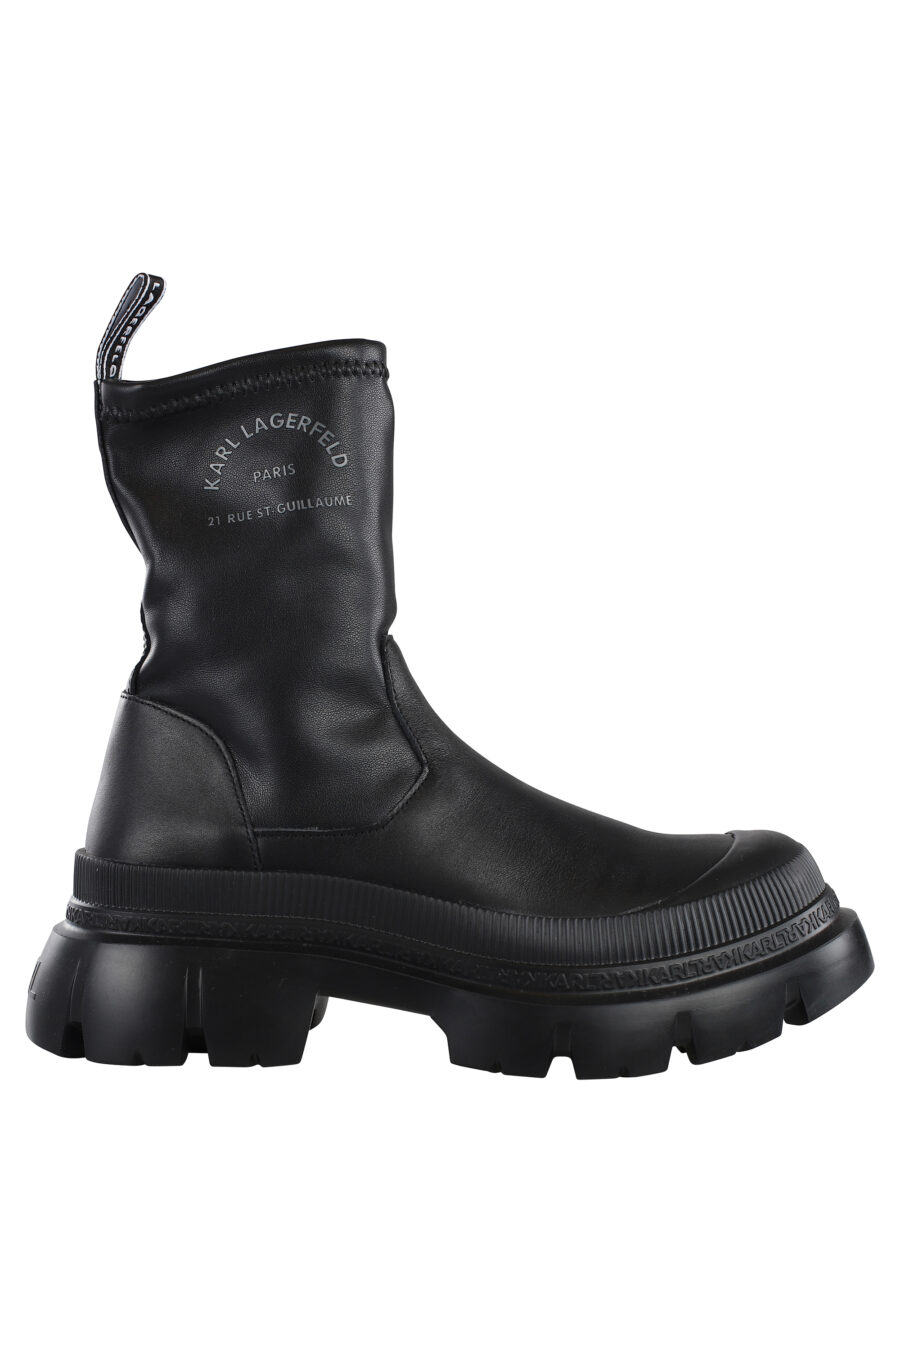 Schwarze Ankle Boots mit schwarzer Plateausohle - IMG 7143